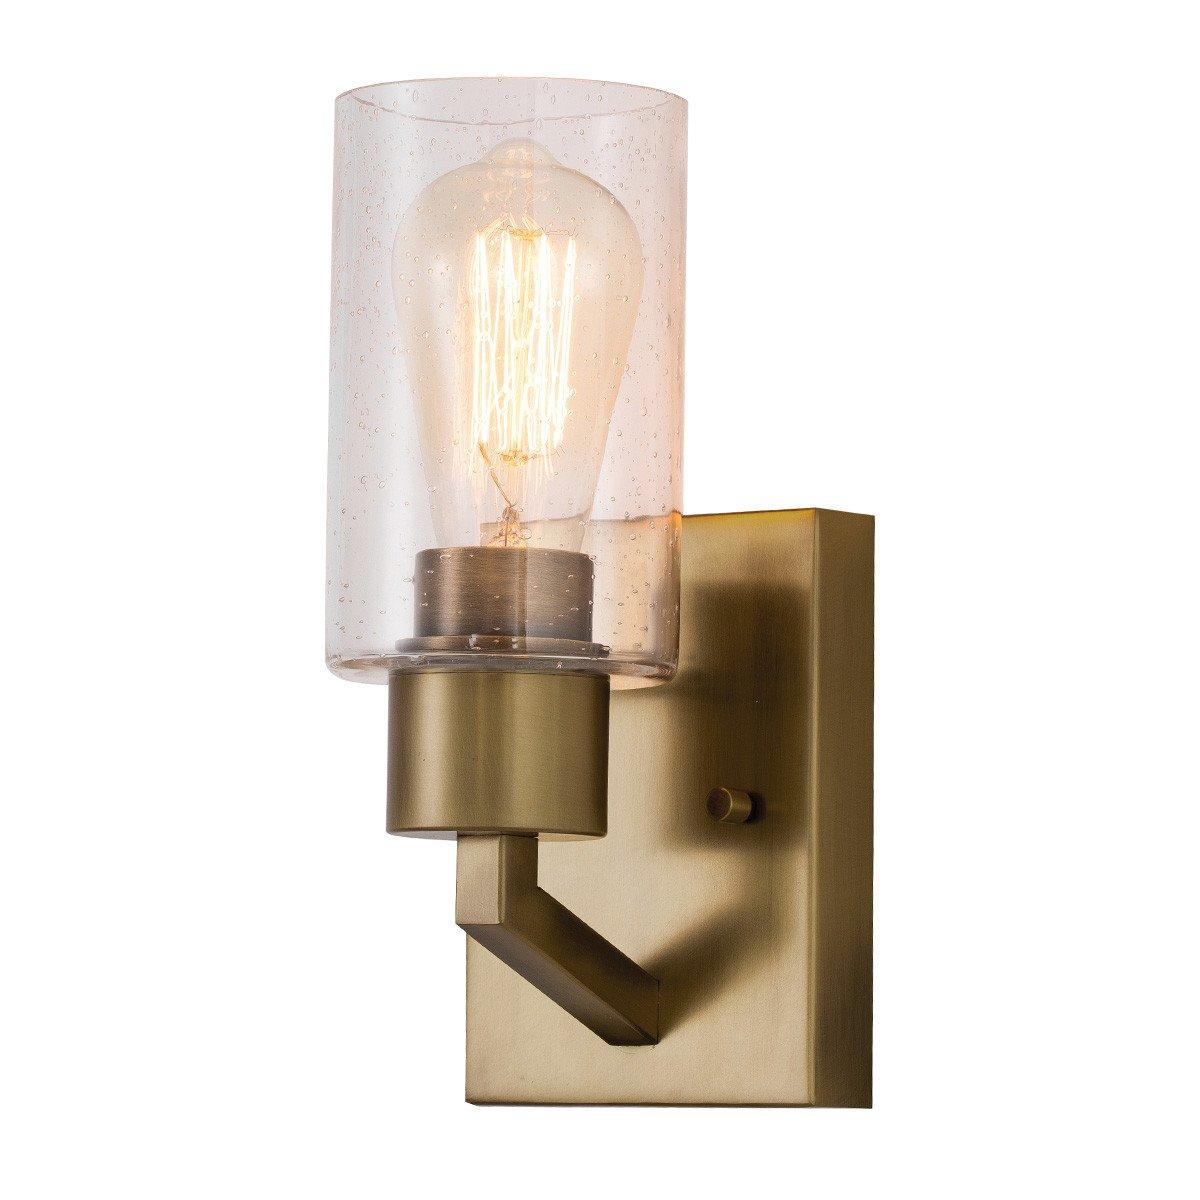 Kichler Deryn Wall Lamp Natural Brass